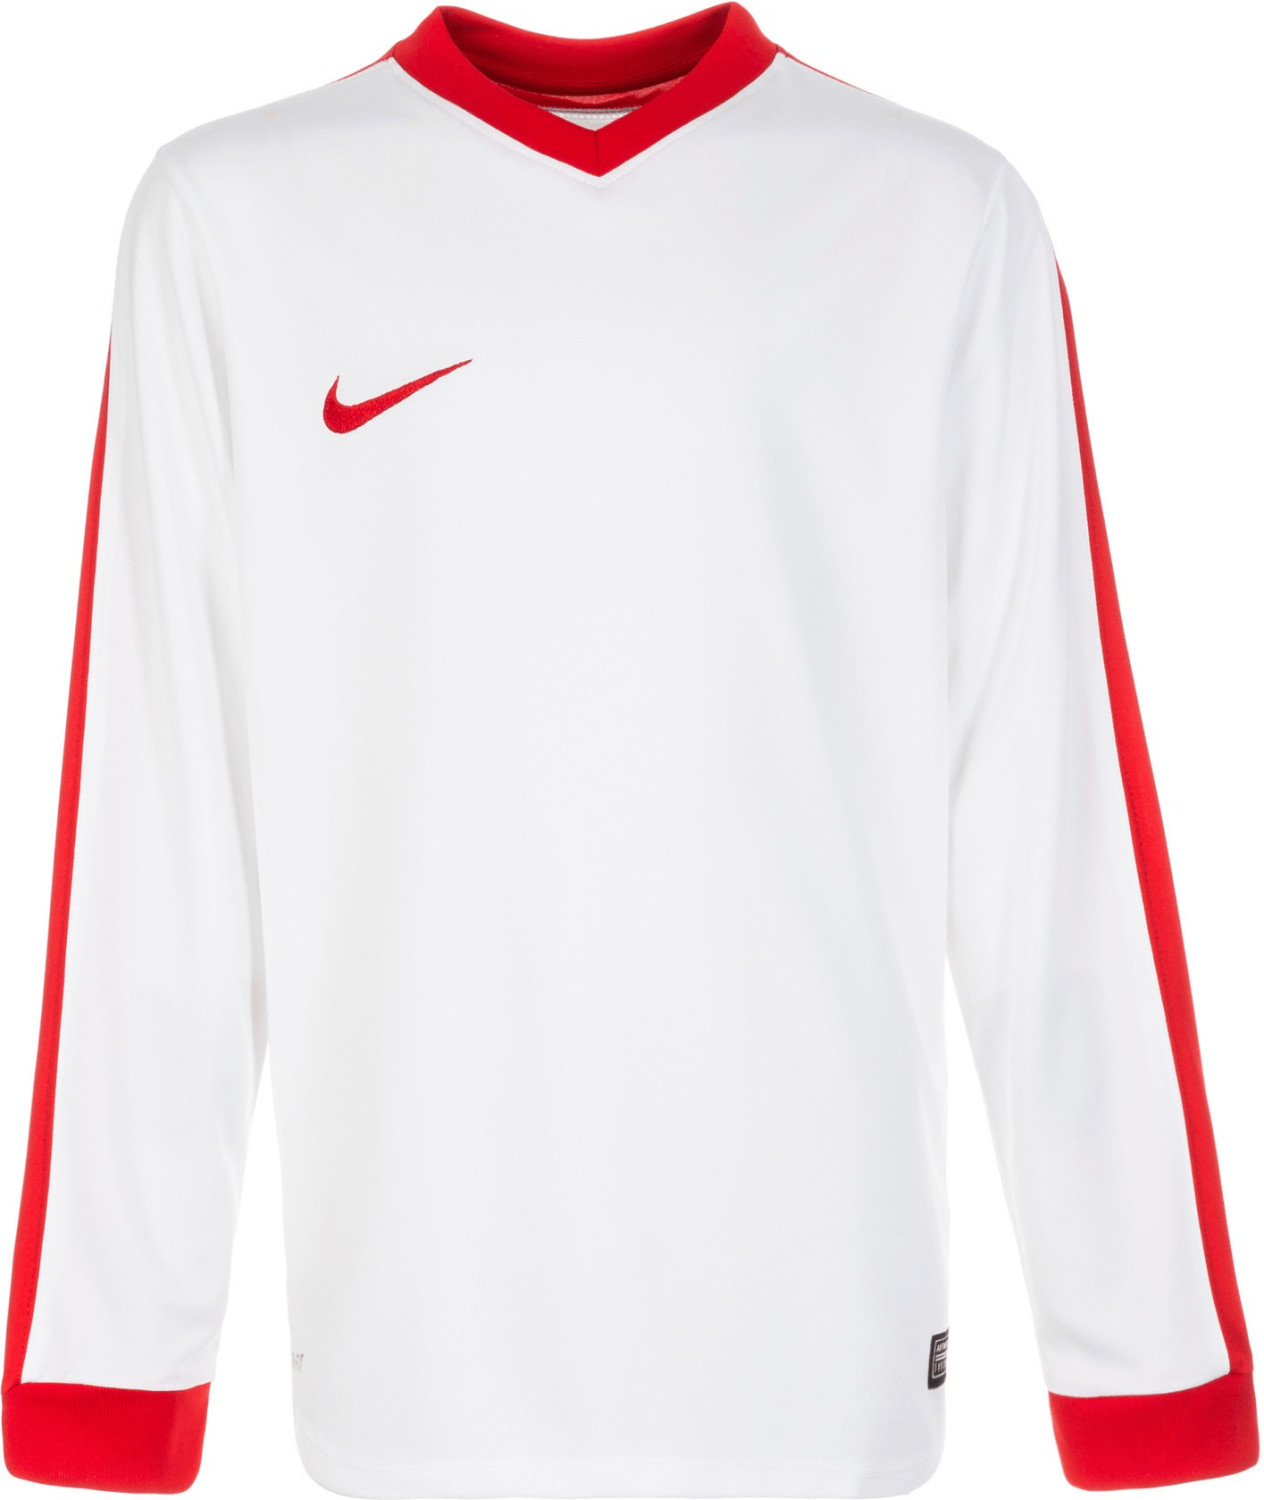 Nike Striker IV Jersey Youth longsleeve white/university red